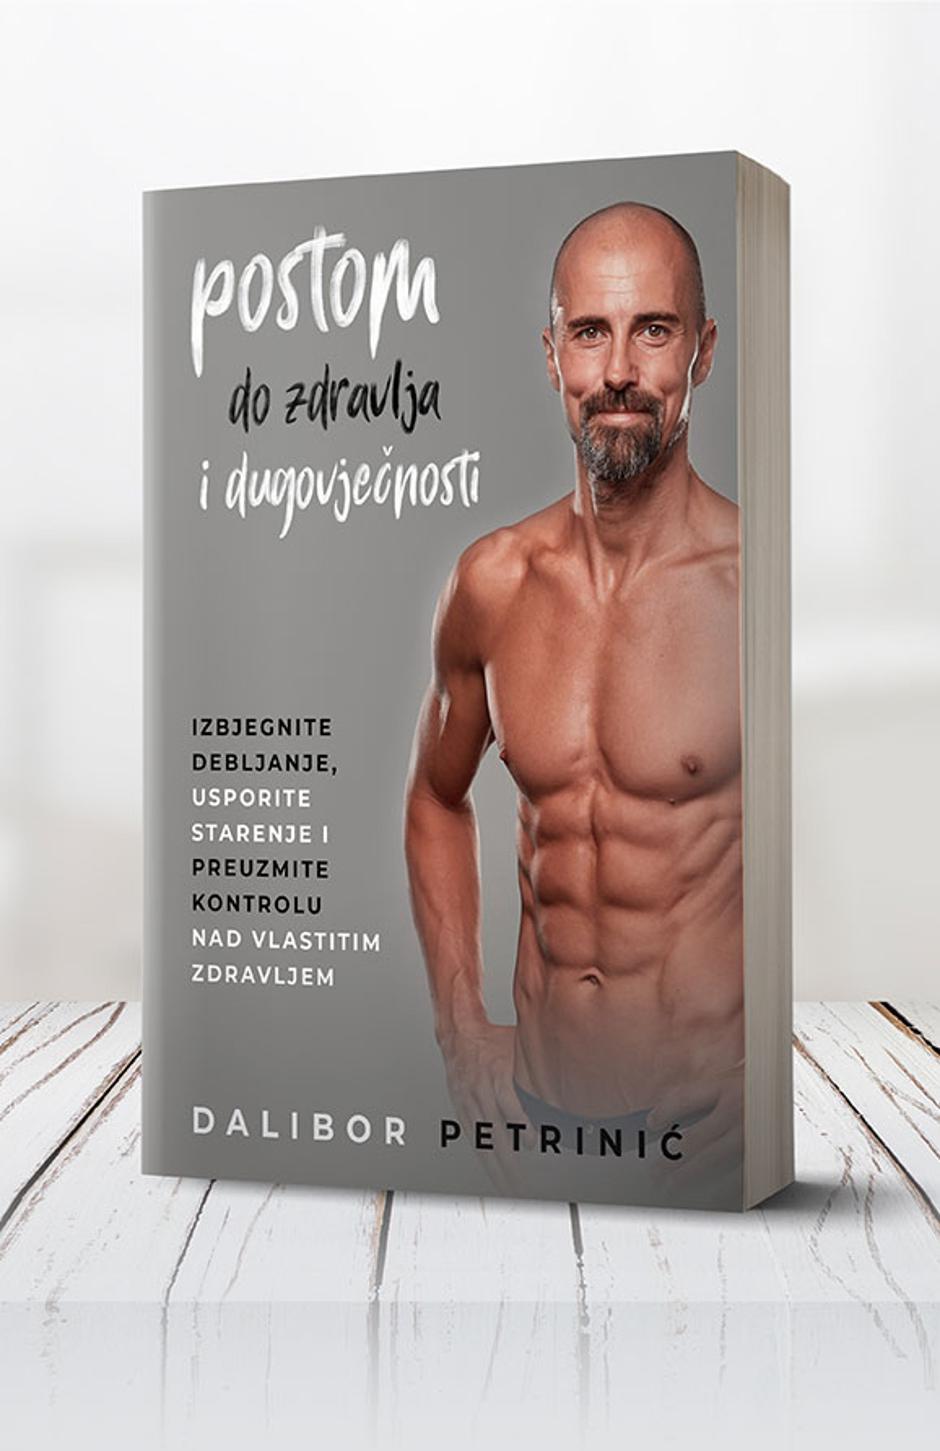  | Author: Dalibor Petrinić, osobni trener